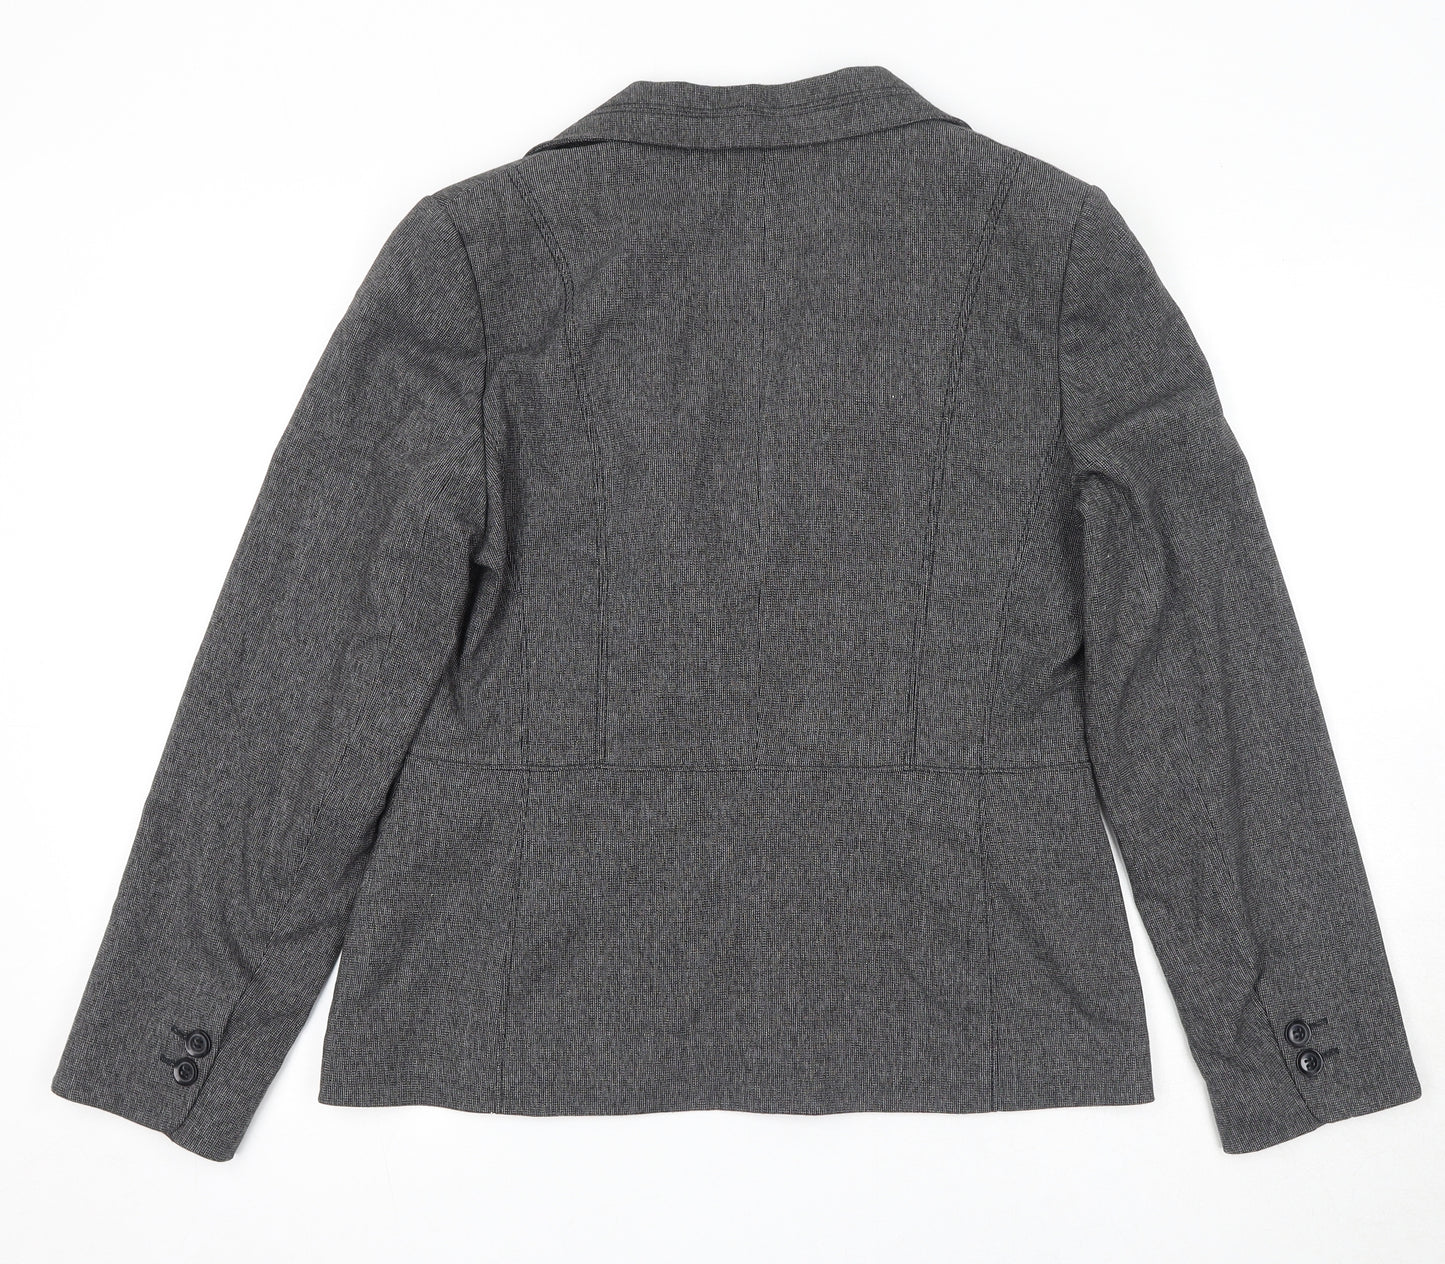 Autonomy Womens Grey Polyester Jacket Blazer Size 12 - Shoulder Pads